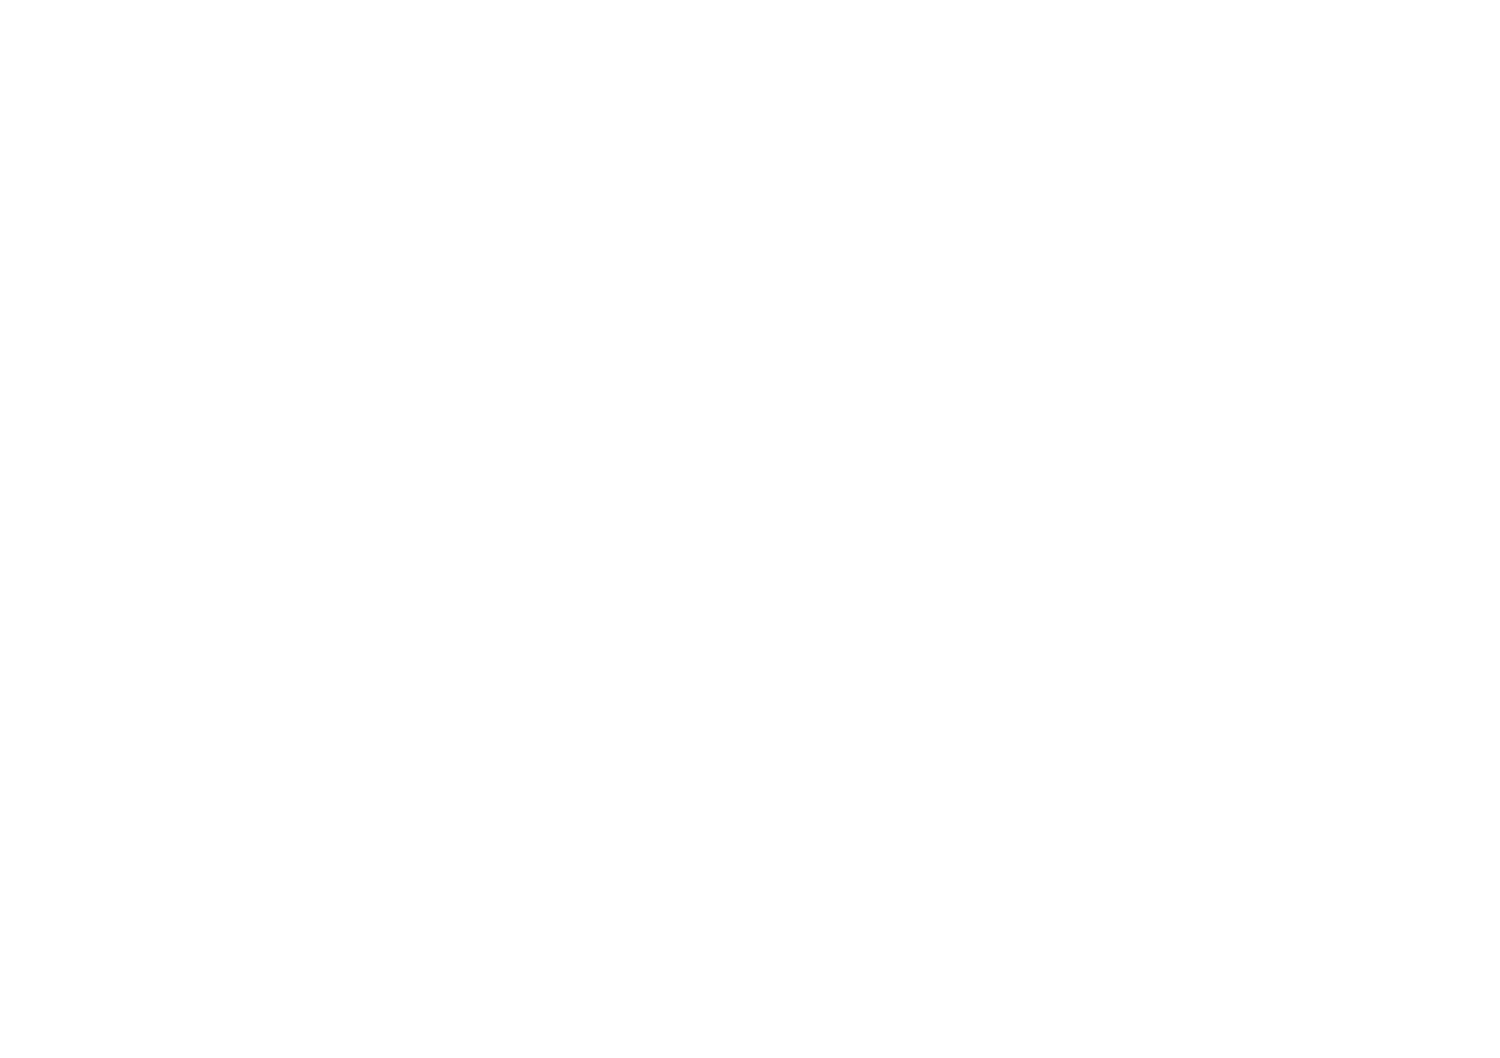 Geoff Okarma Construction Inc